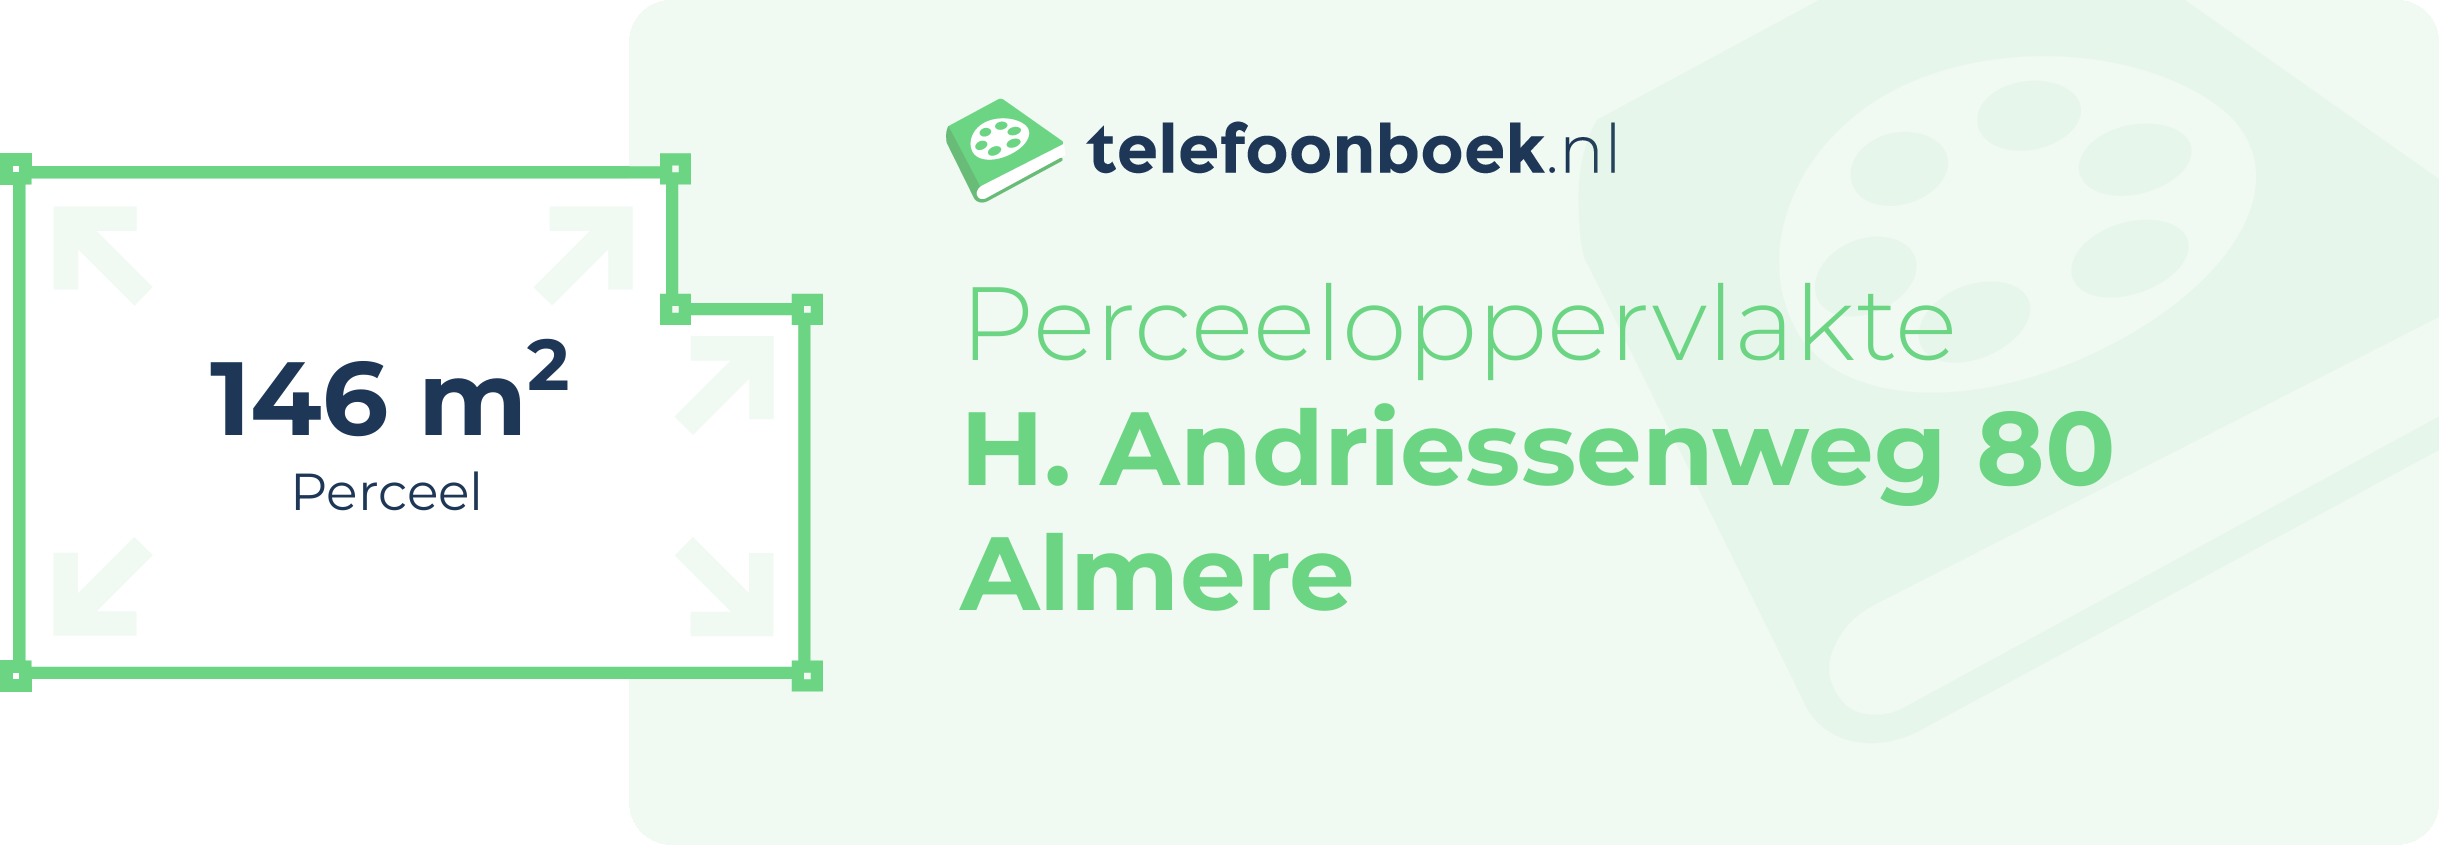 Perceeloppervlakte H. Andriessenweg 80 Almere